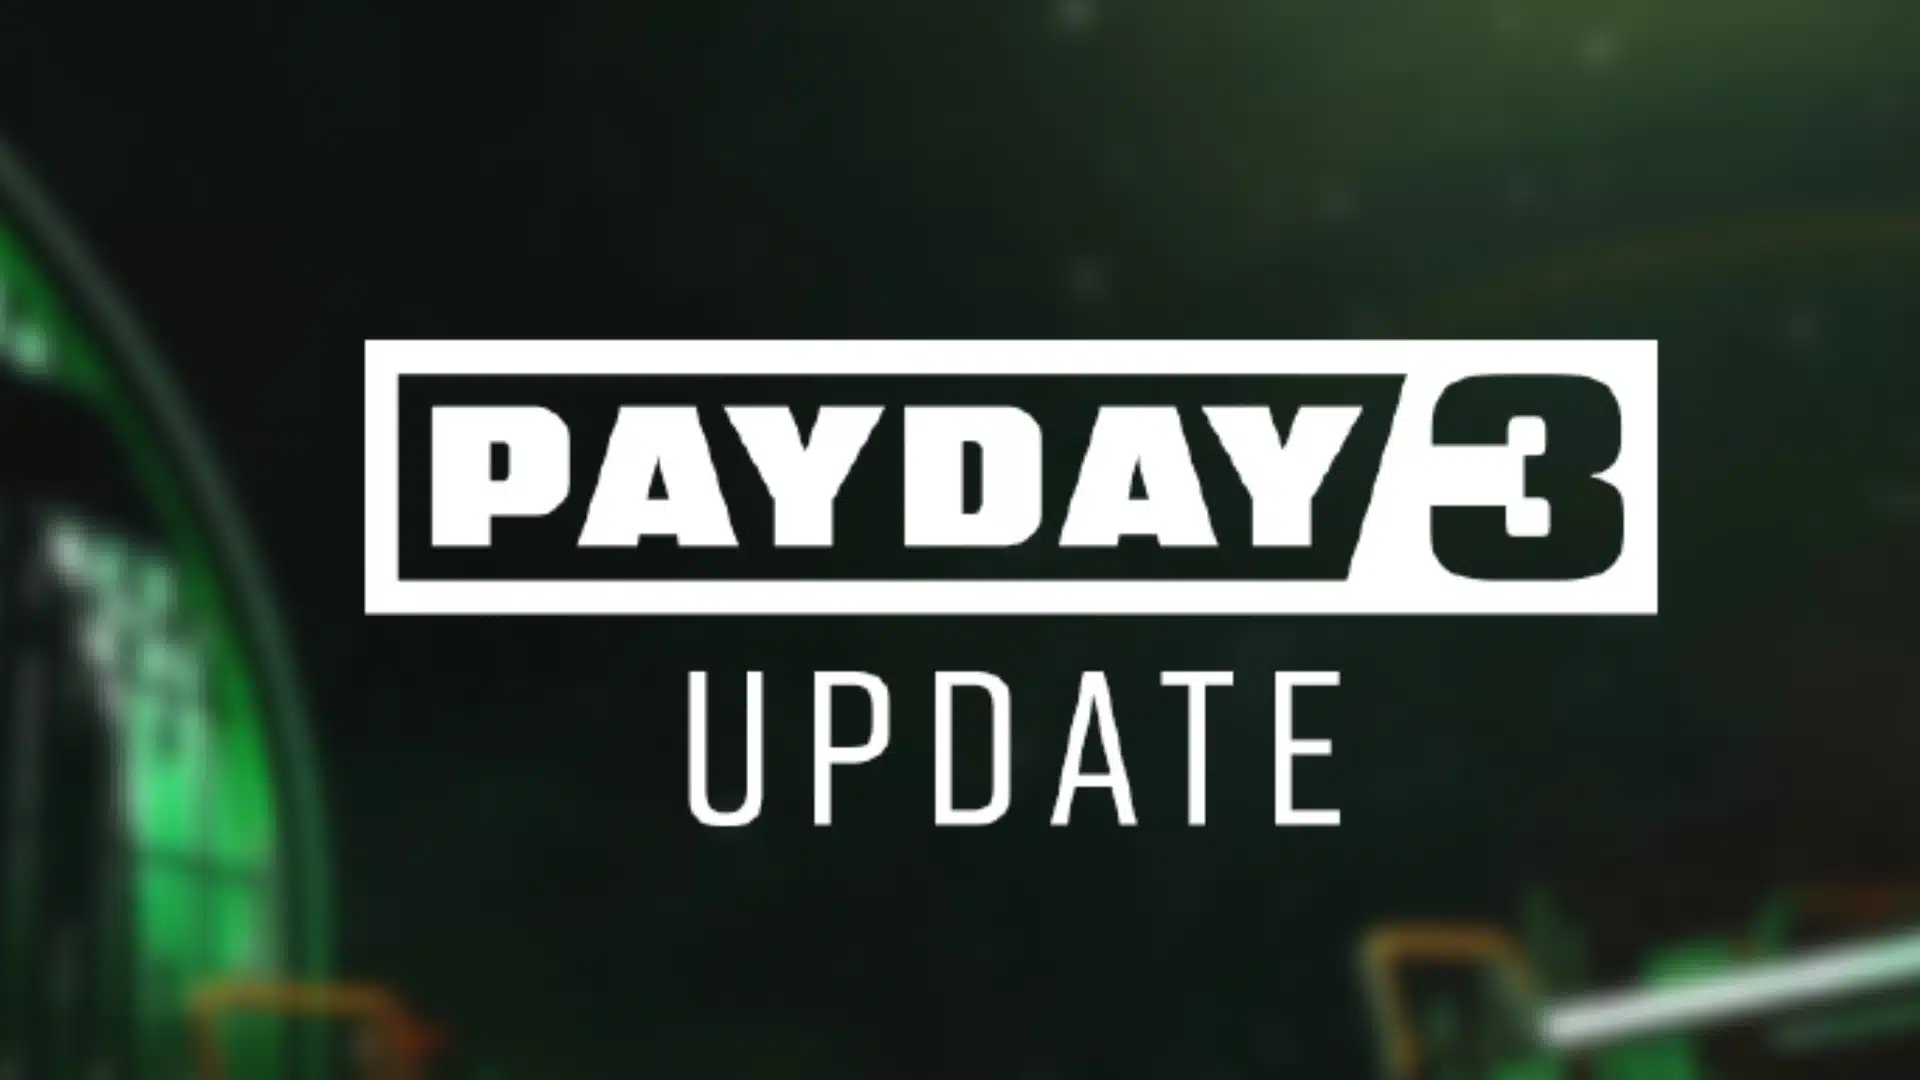 Payday 3 Update 1.000.019 December 12